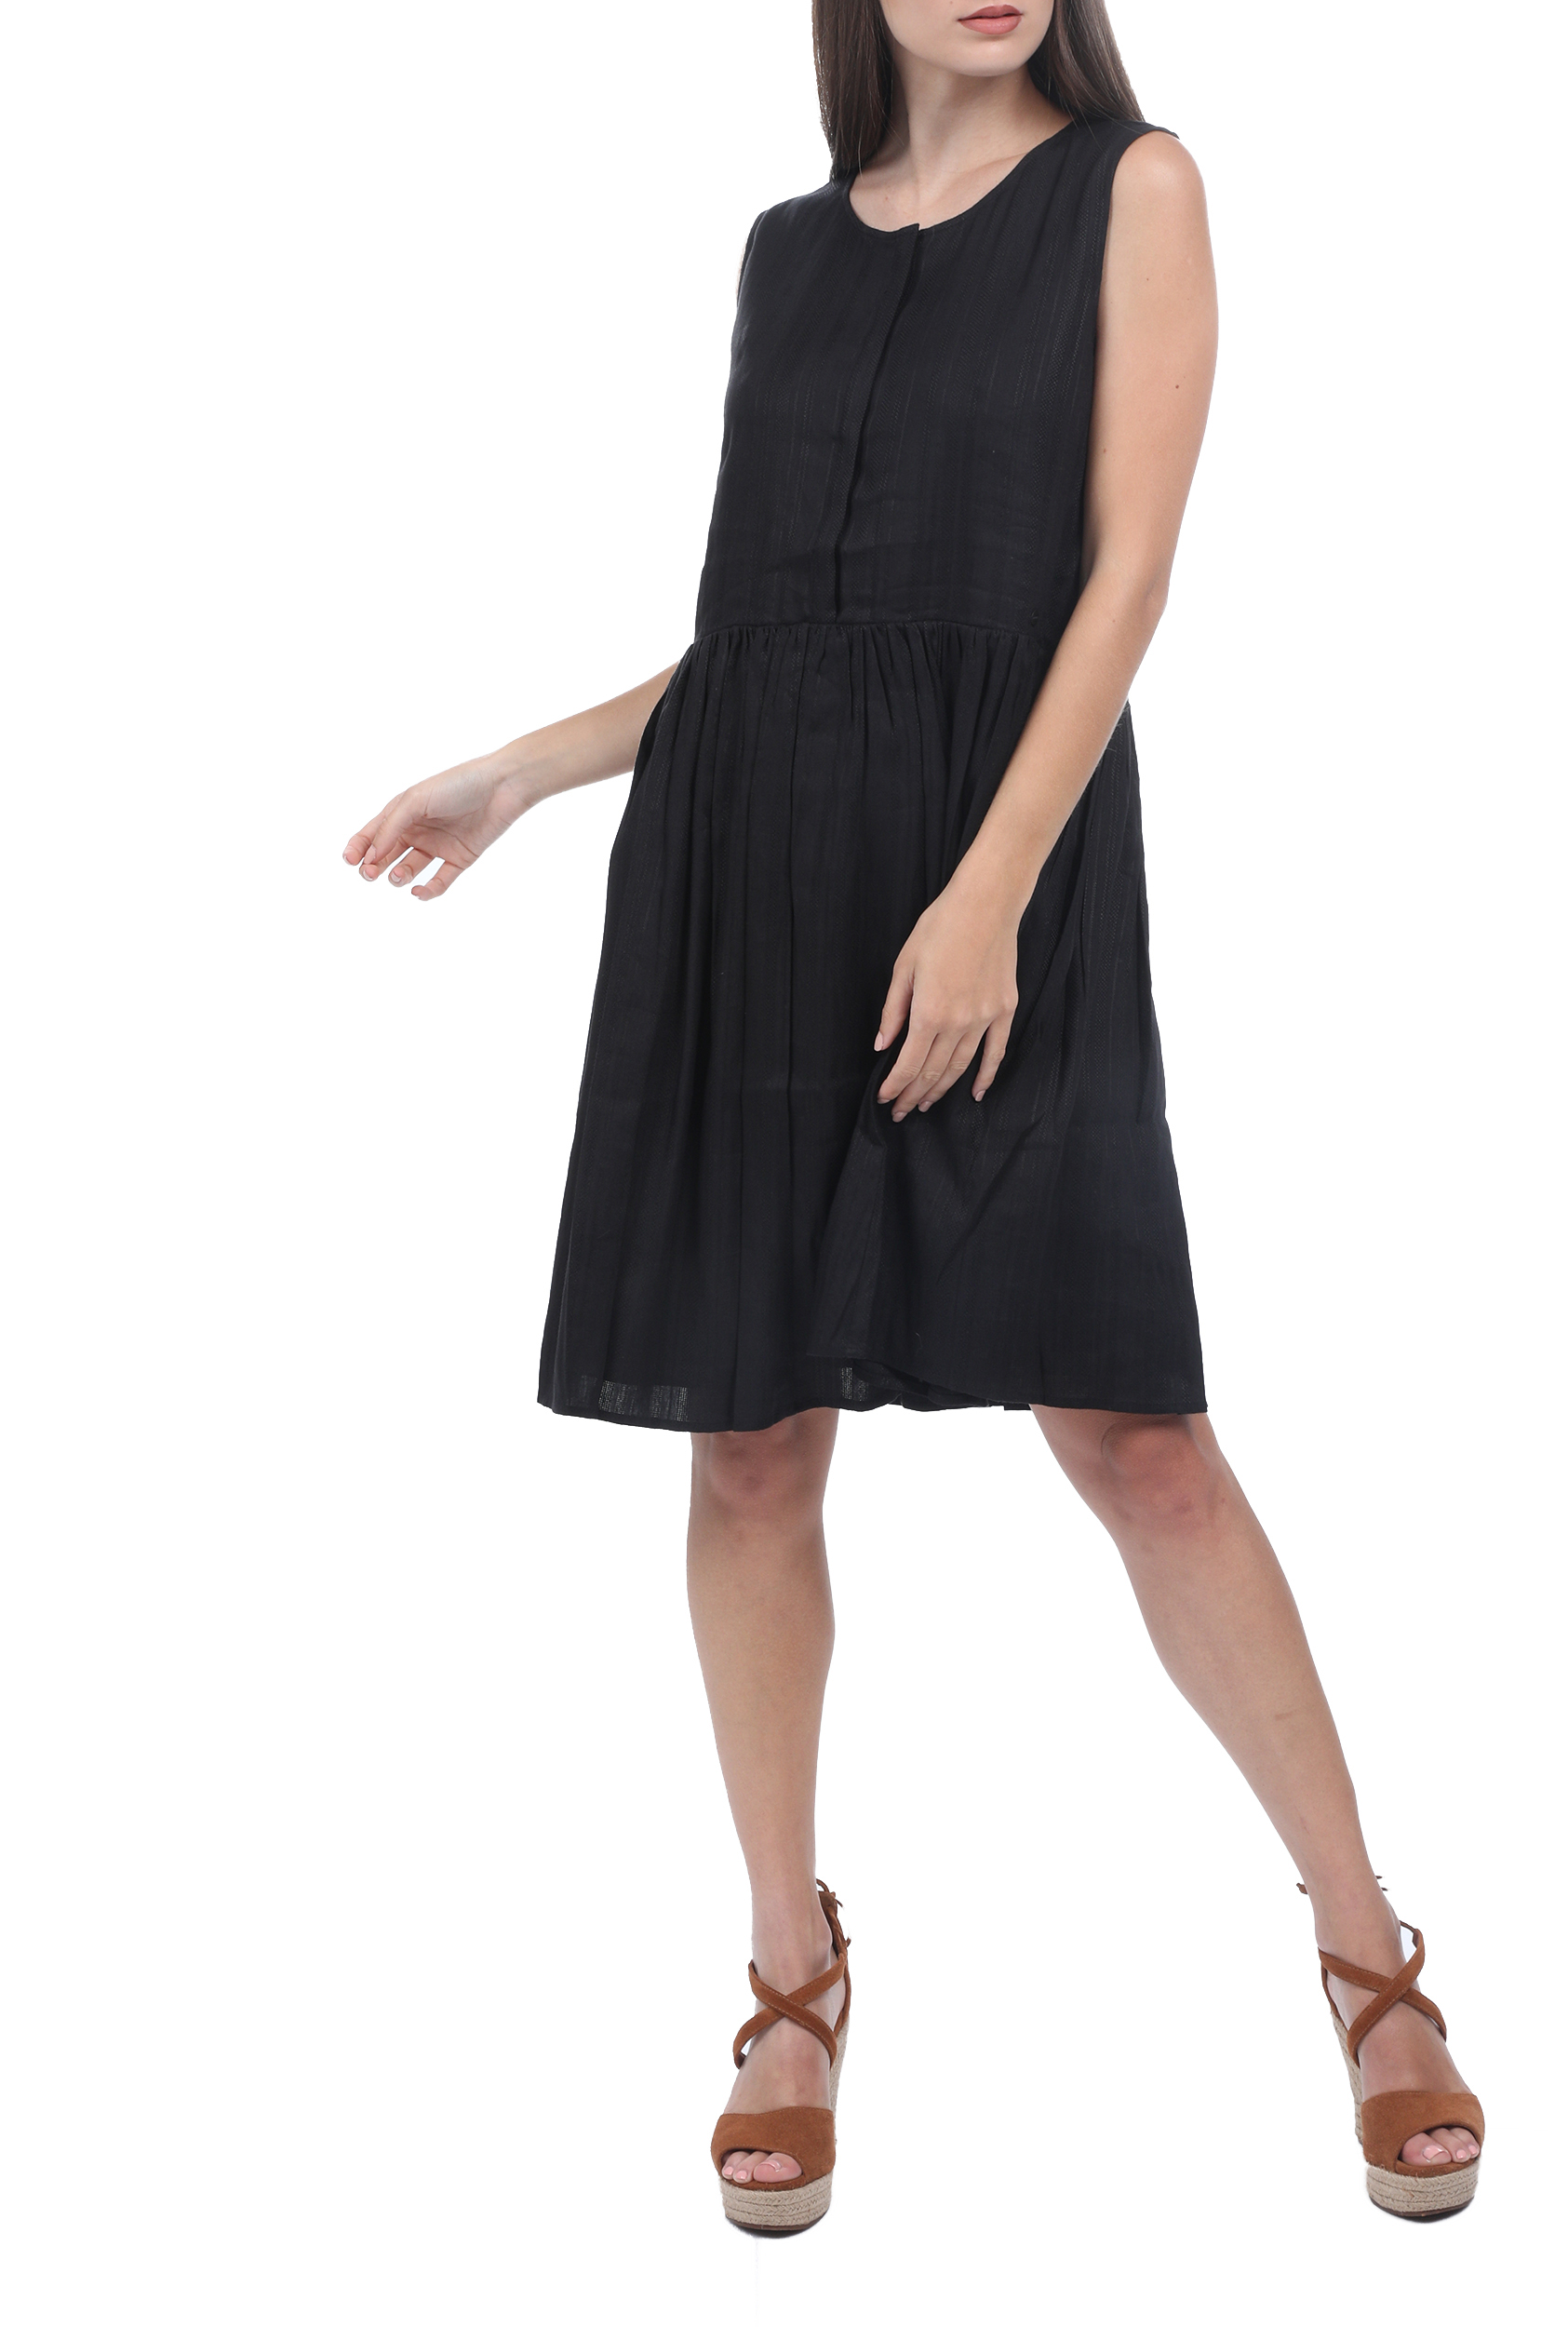 SUPERDRY – Γυναικειο φορεμα SUPERDRY TEXTURED DAY DRESS μαυρο